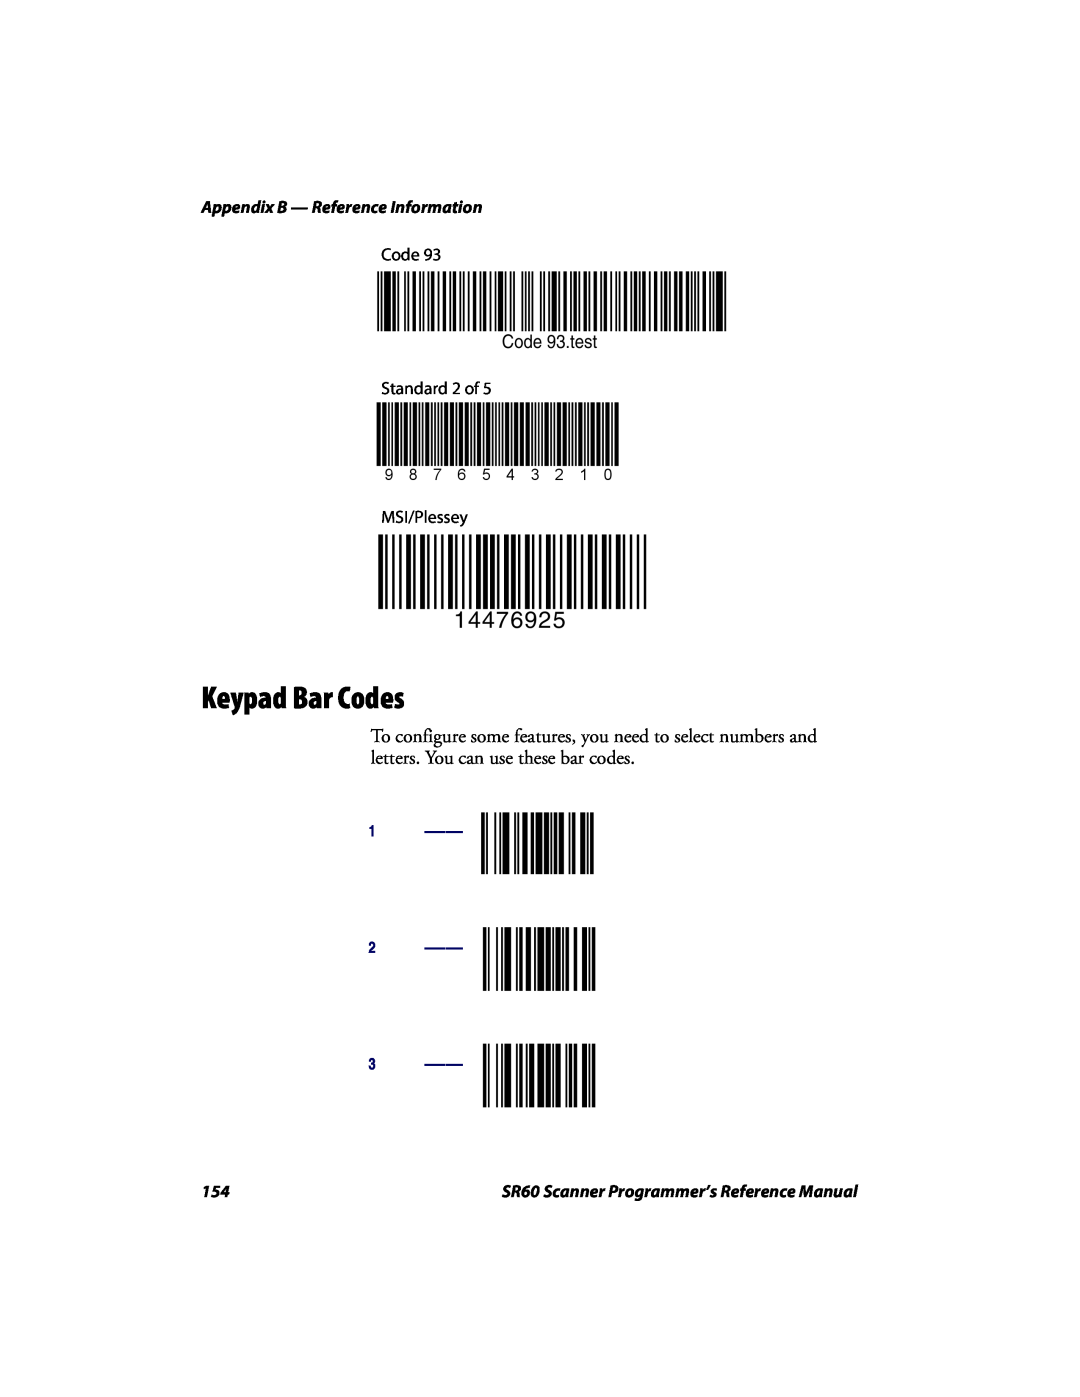 Intermec SR60 Keypad Bar Codes, 14476925, Code 93.test, Appendix B - Reference Information, Standard 2 of, MSI/Plessey 